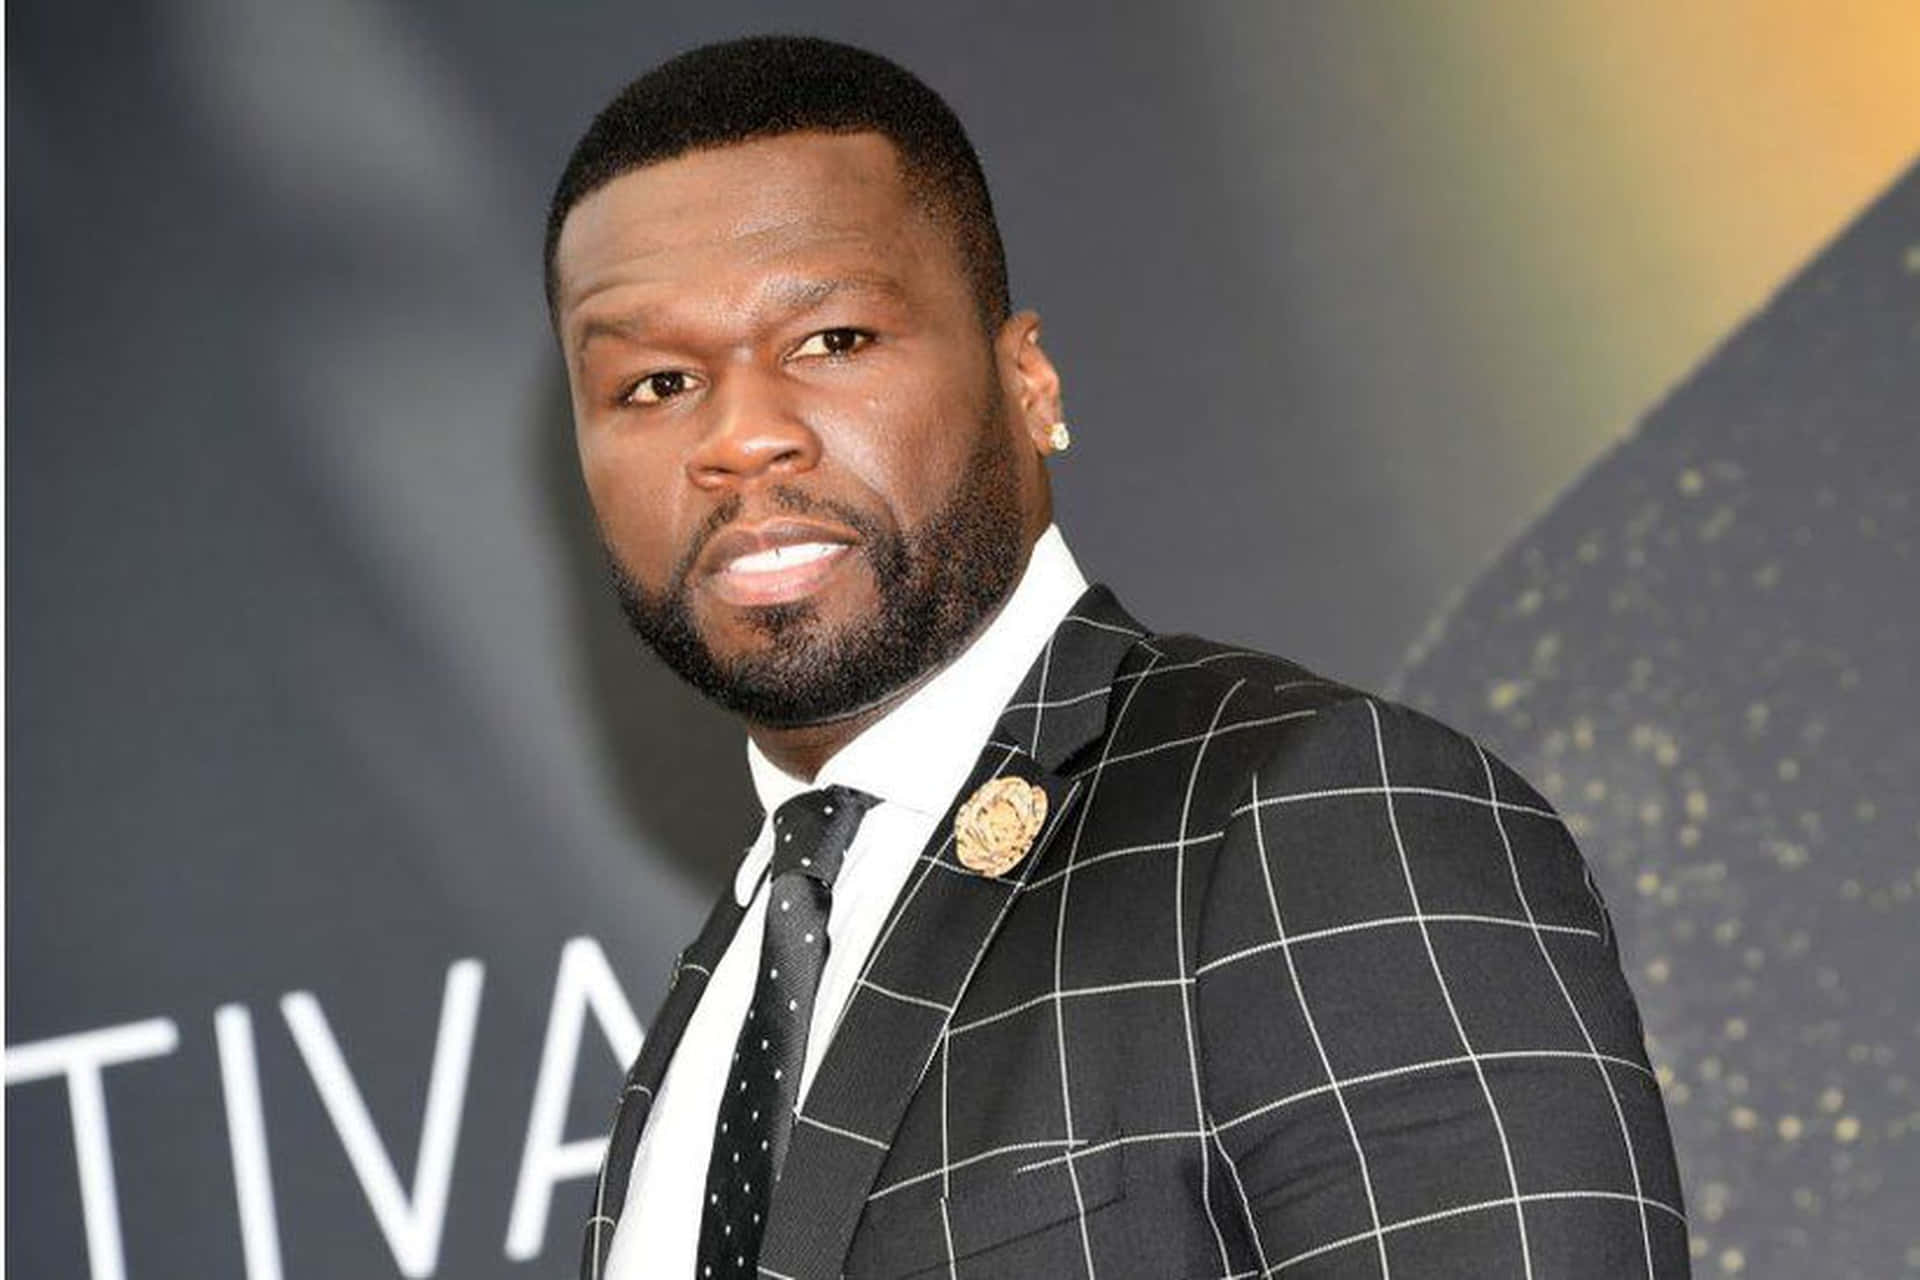 50 Cent unleashing his inner superpower